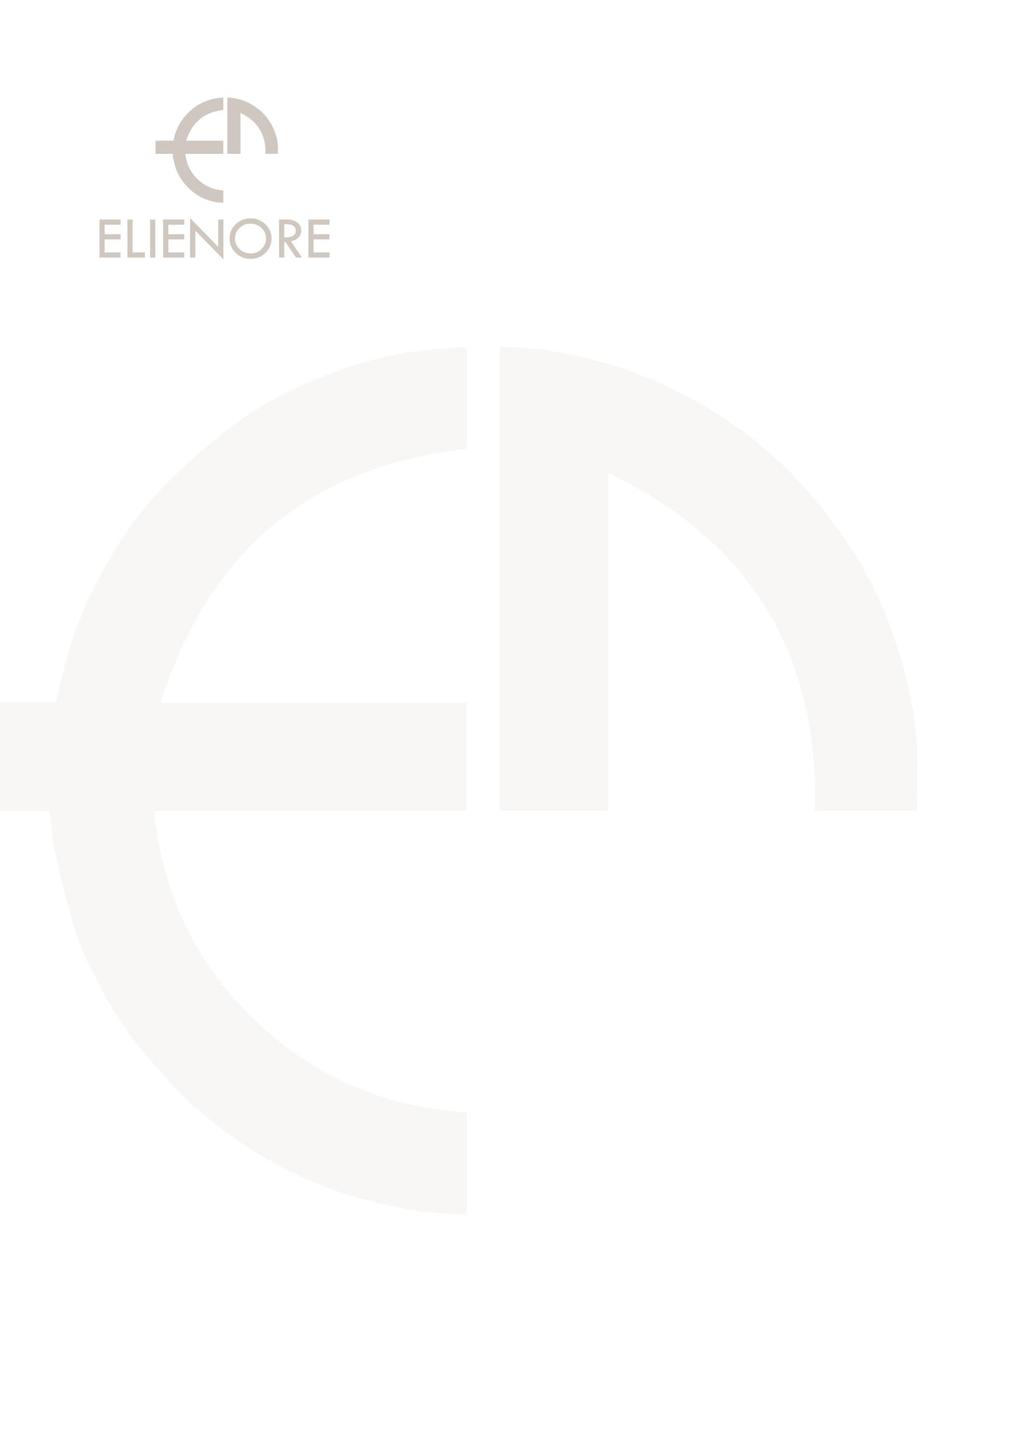 Elienore Website Email info@elienore.com Tel +31(0)647 890 445 Bank NL14RABO 01712092 65 BTW nr. 200727357B01 KvK nr.